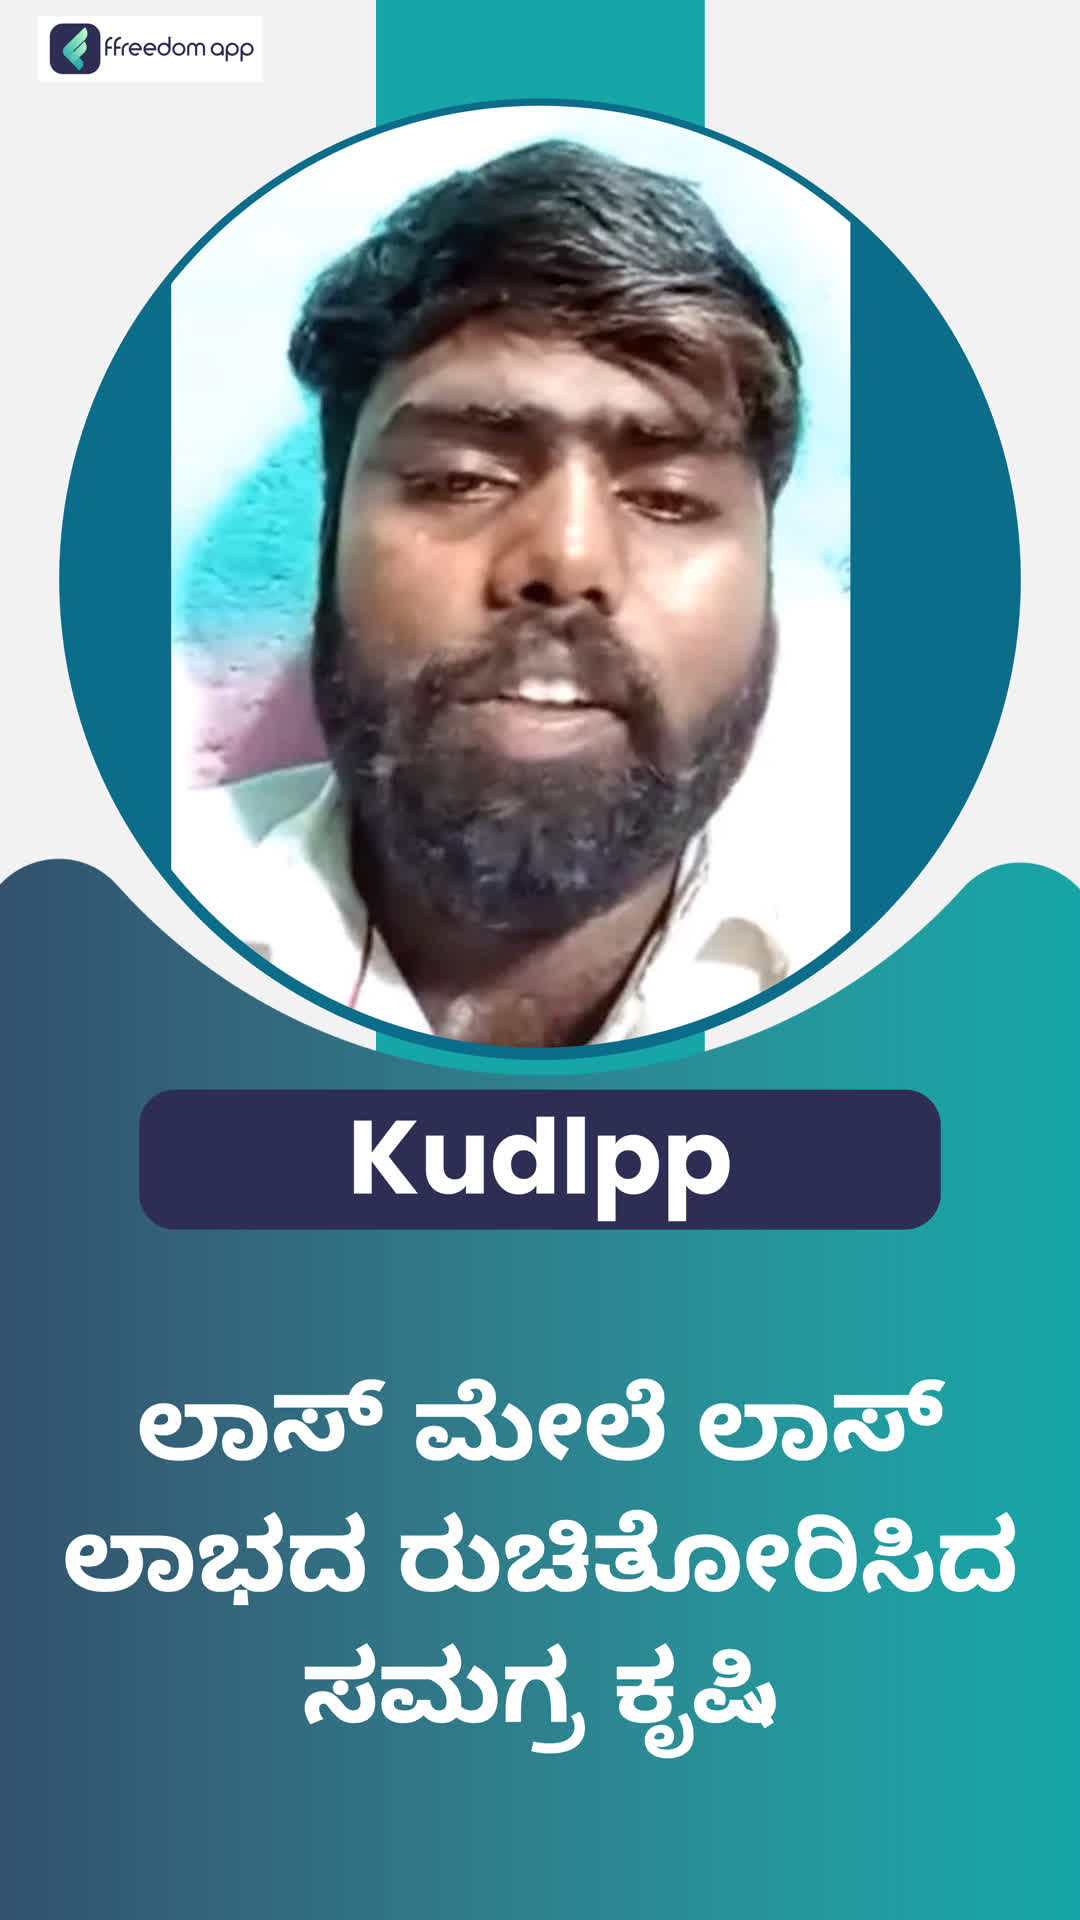 Kudlpp's Honest Review of ffreedom app - Raichur ,Karnataka